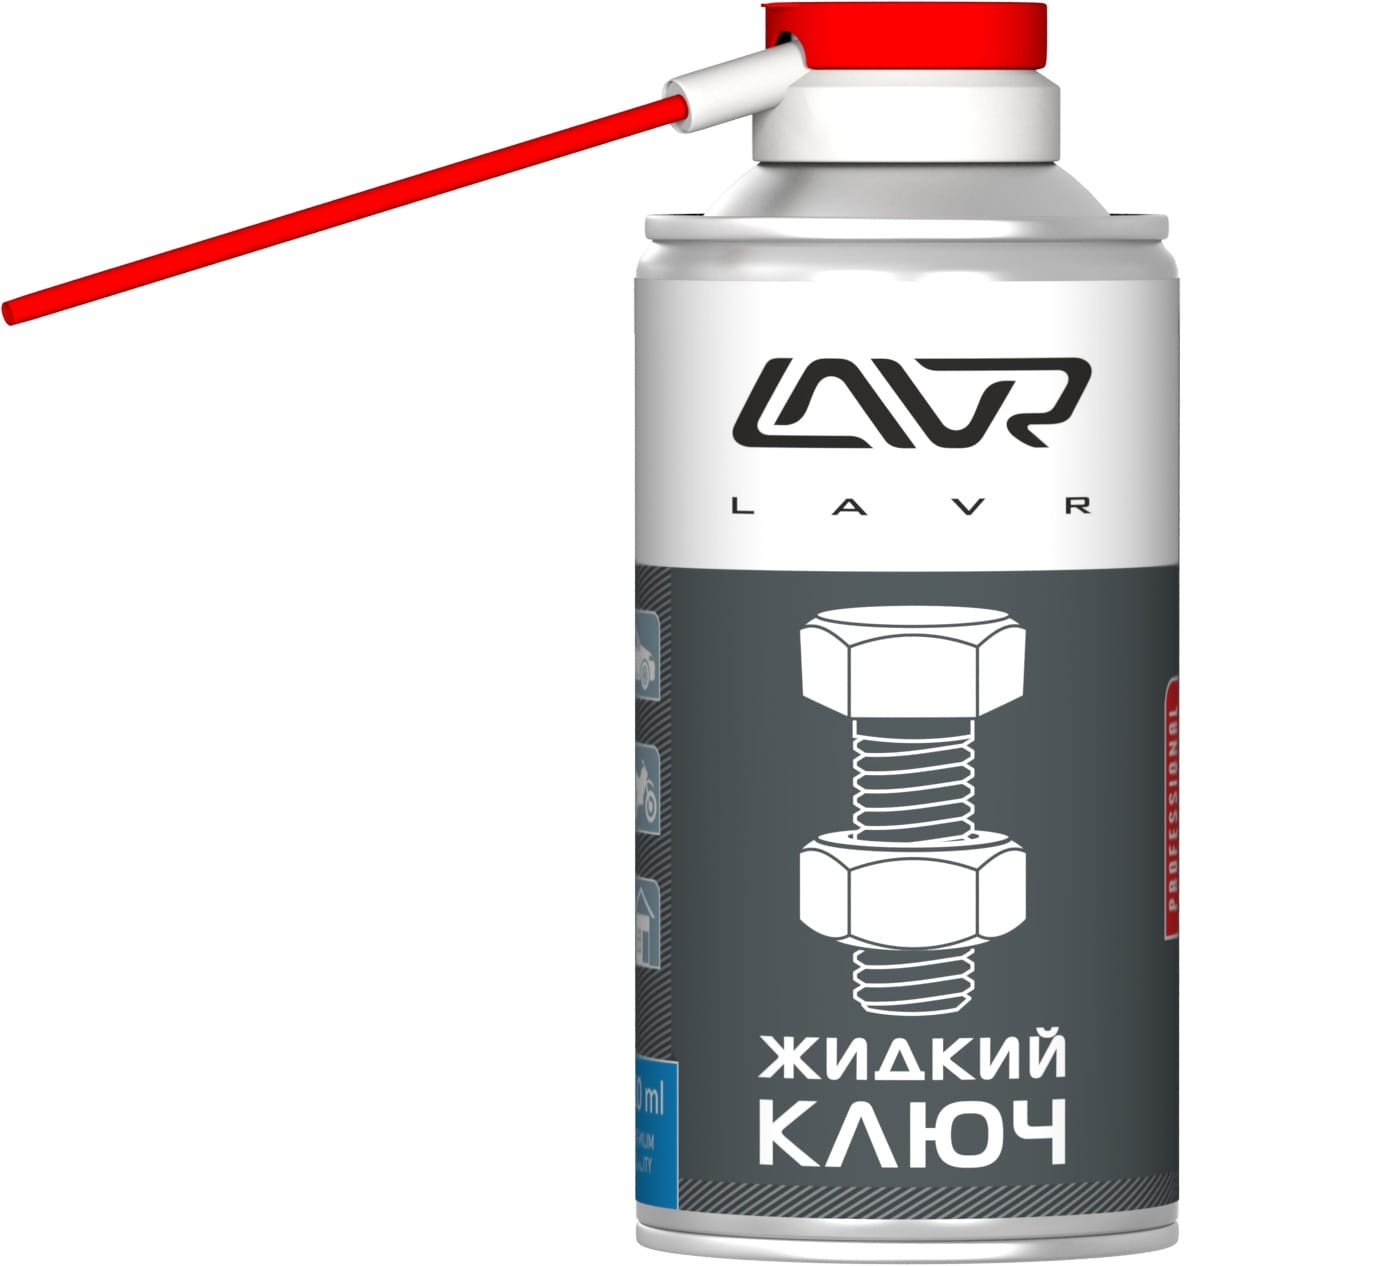 Купить запчасть LAVR - Ln1490 Жидкий ключ LAVR multifunctional fast liquid key  210 ml